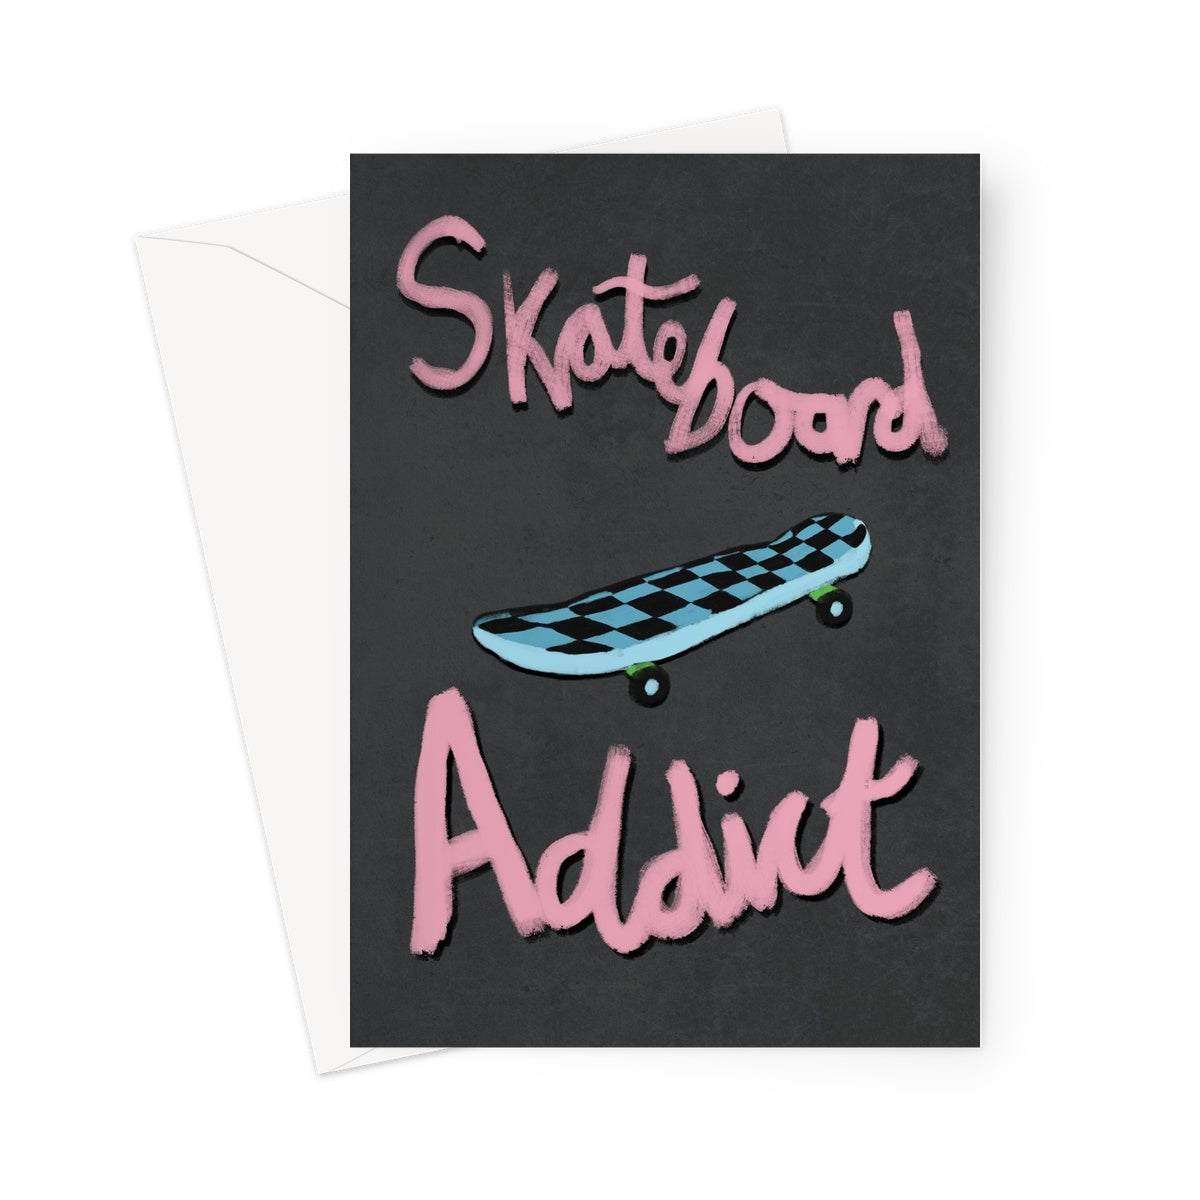 Skateboard Addict Grey, Pink, Blue Greeting Card